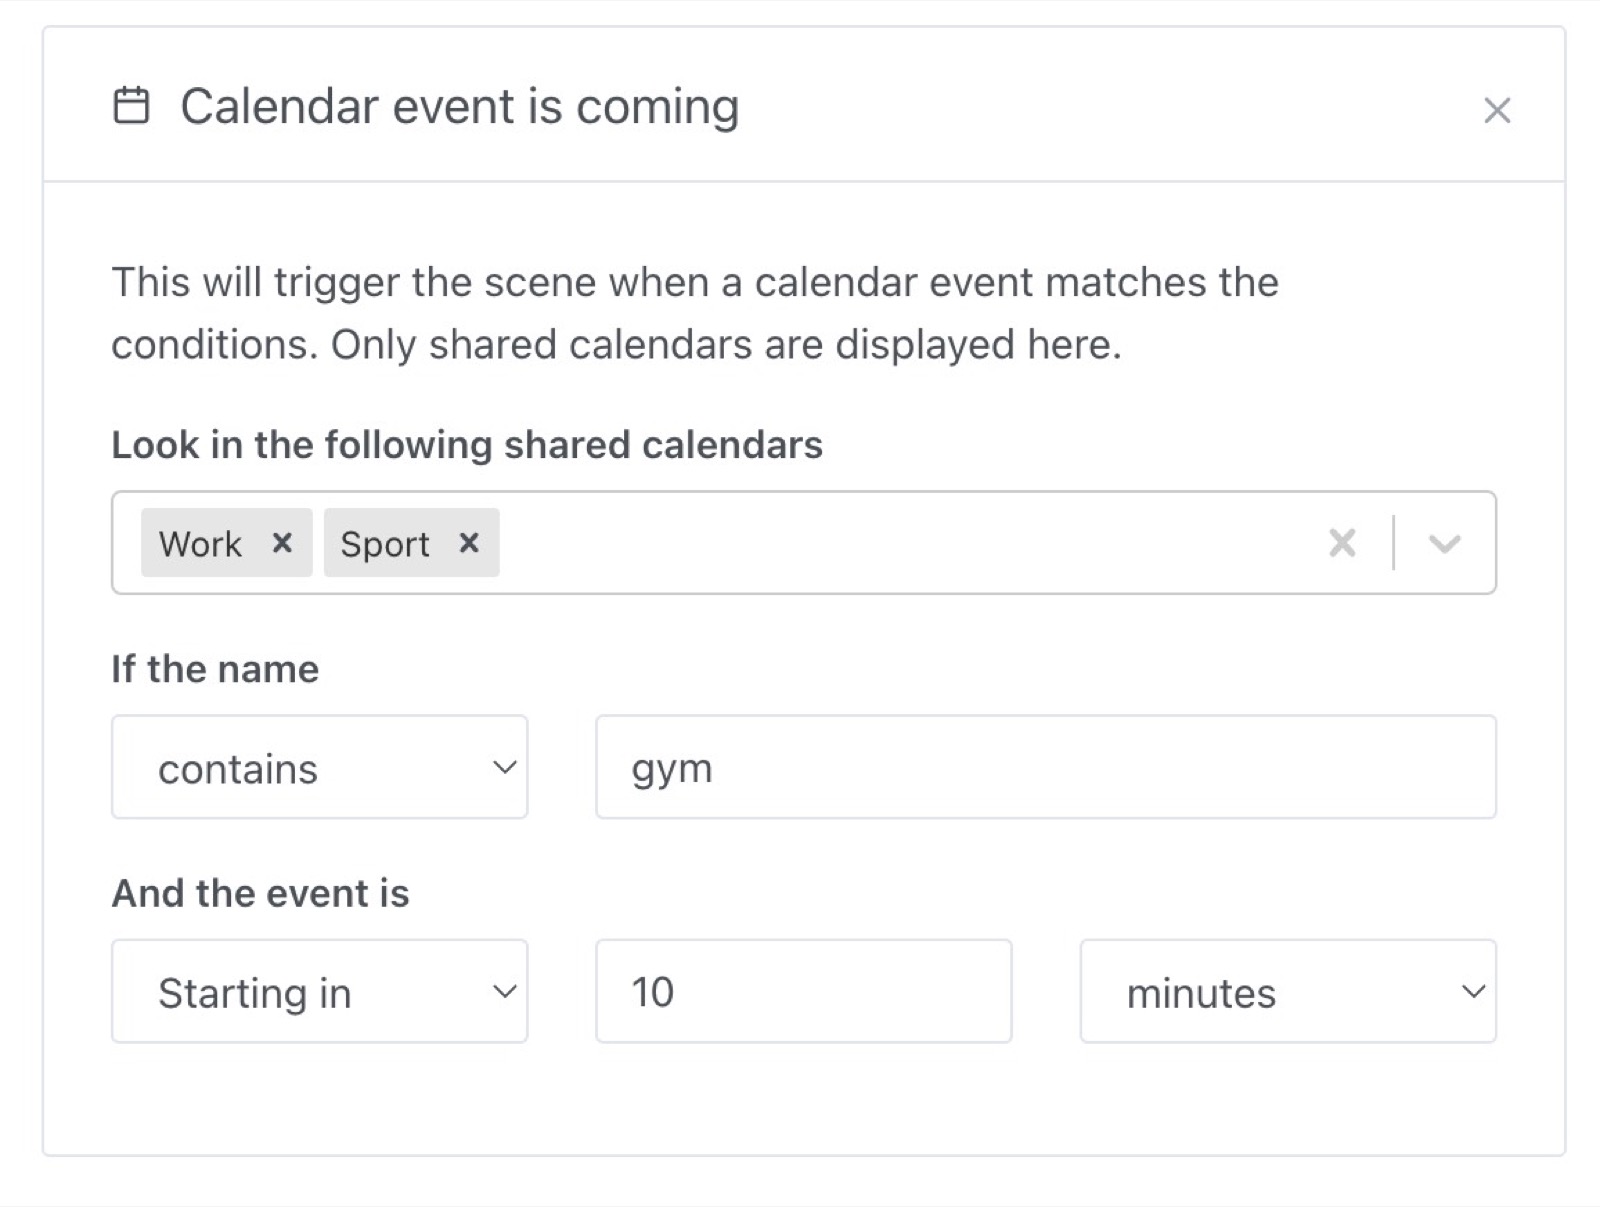 Calendar event is coming trigger